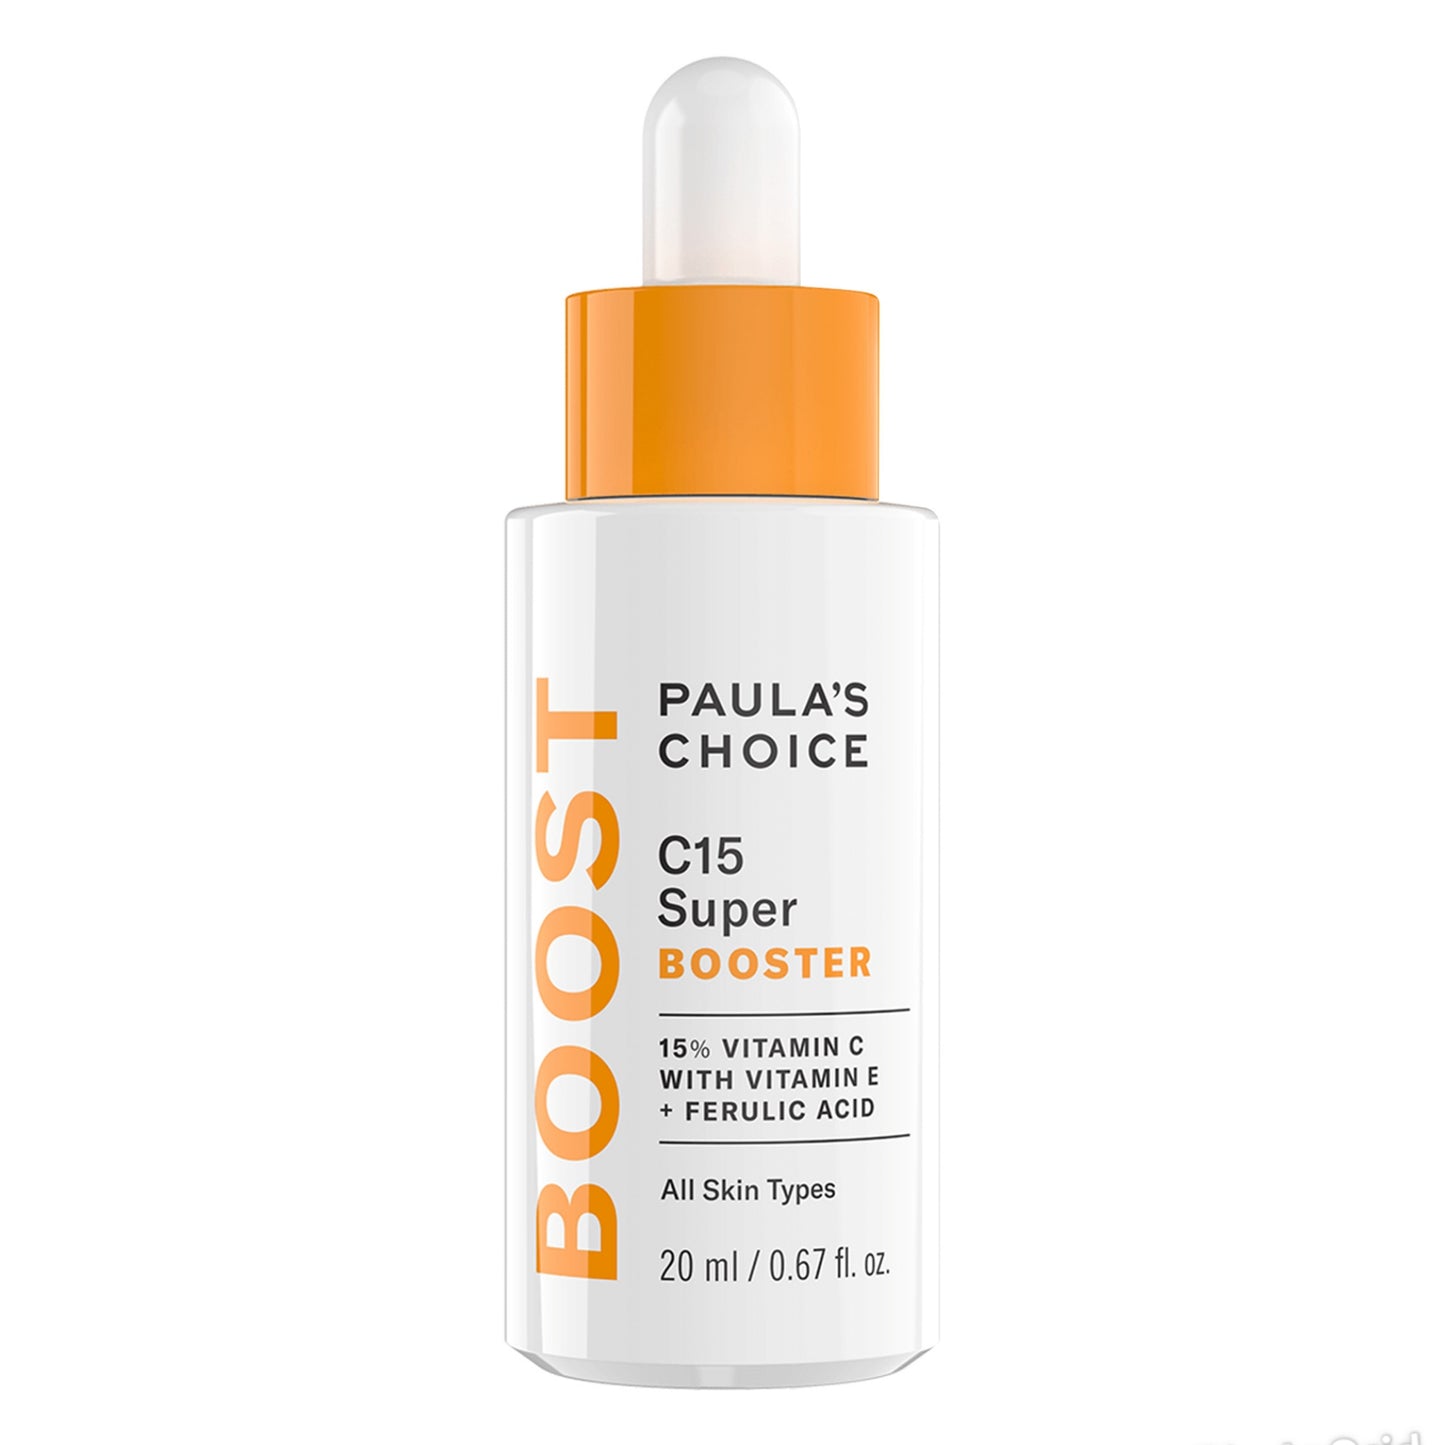 PAULA’S CHOICE C15 SUPER BOOSTER